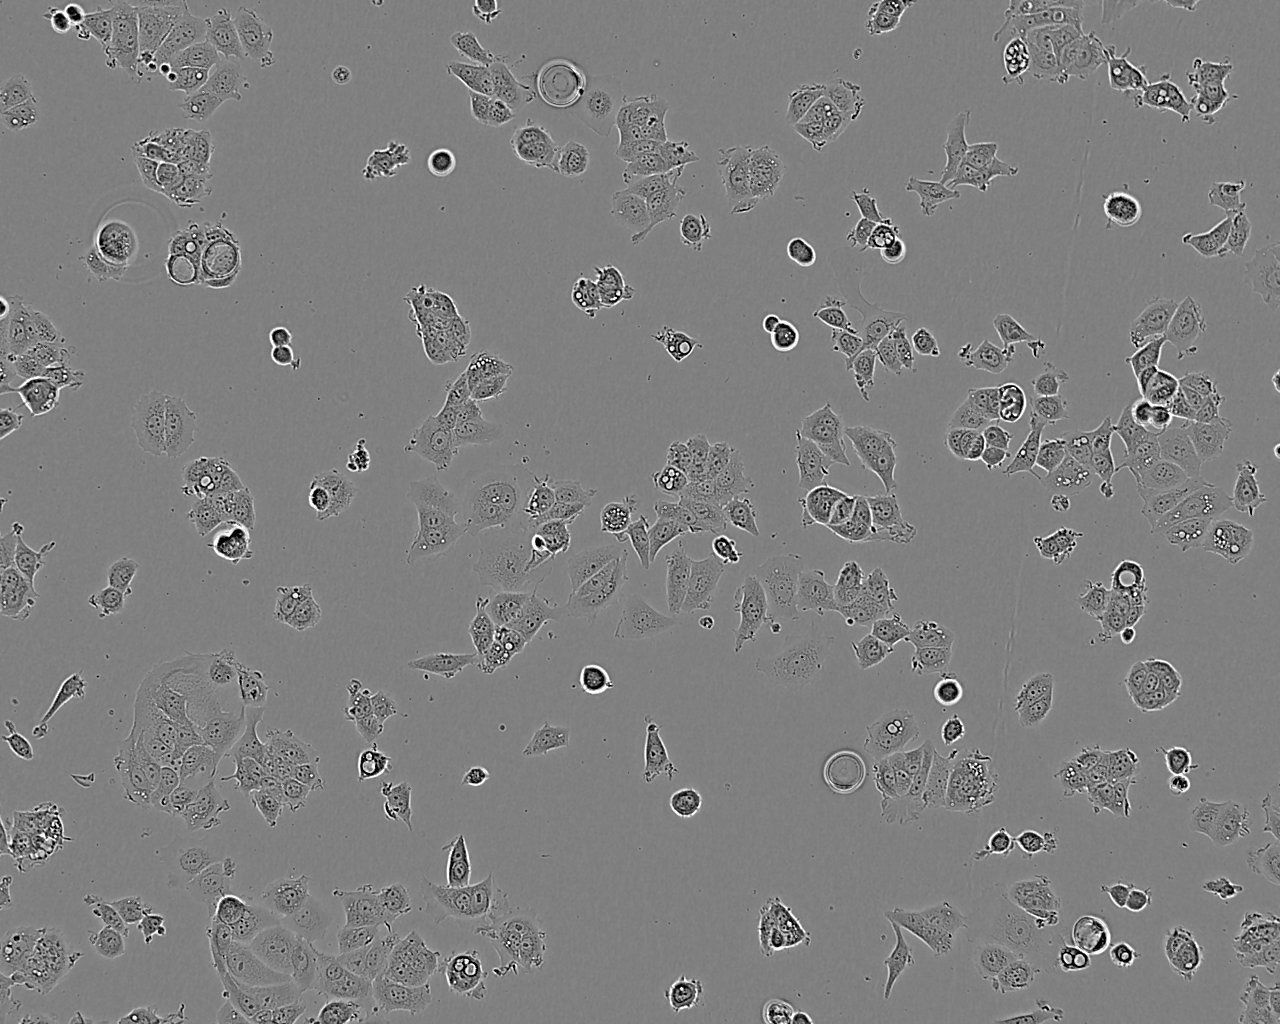 NCI-H2122 Cells|人肺癌细胞系,NCI-H2122 Cells